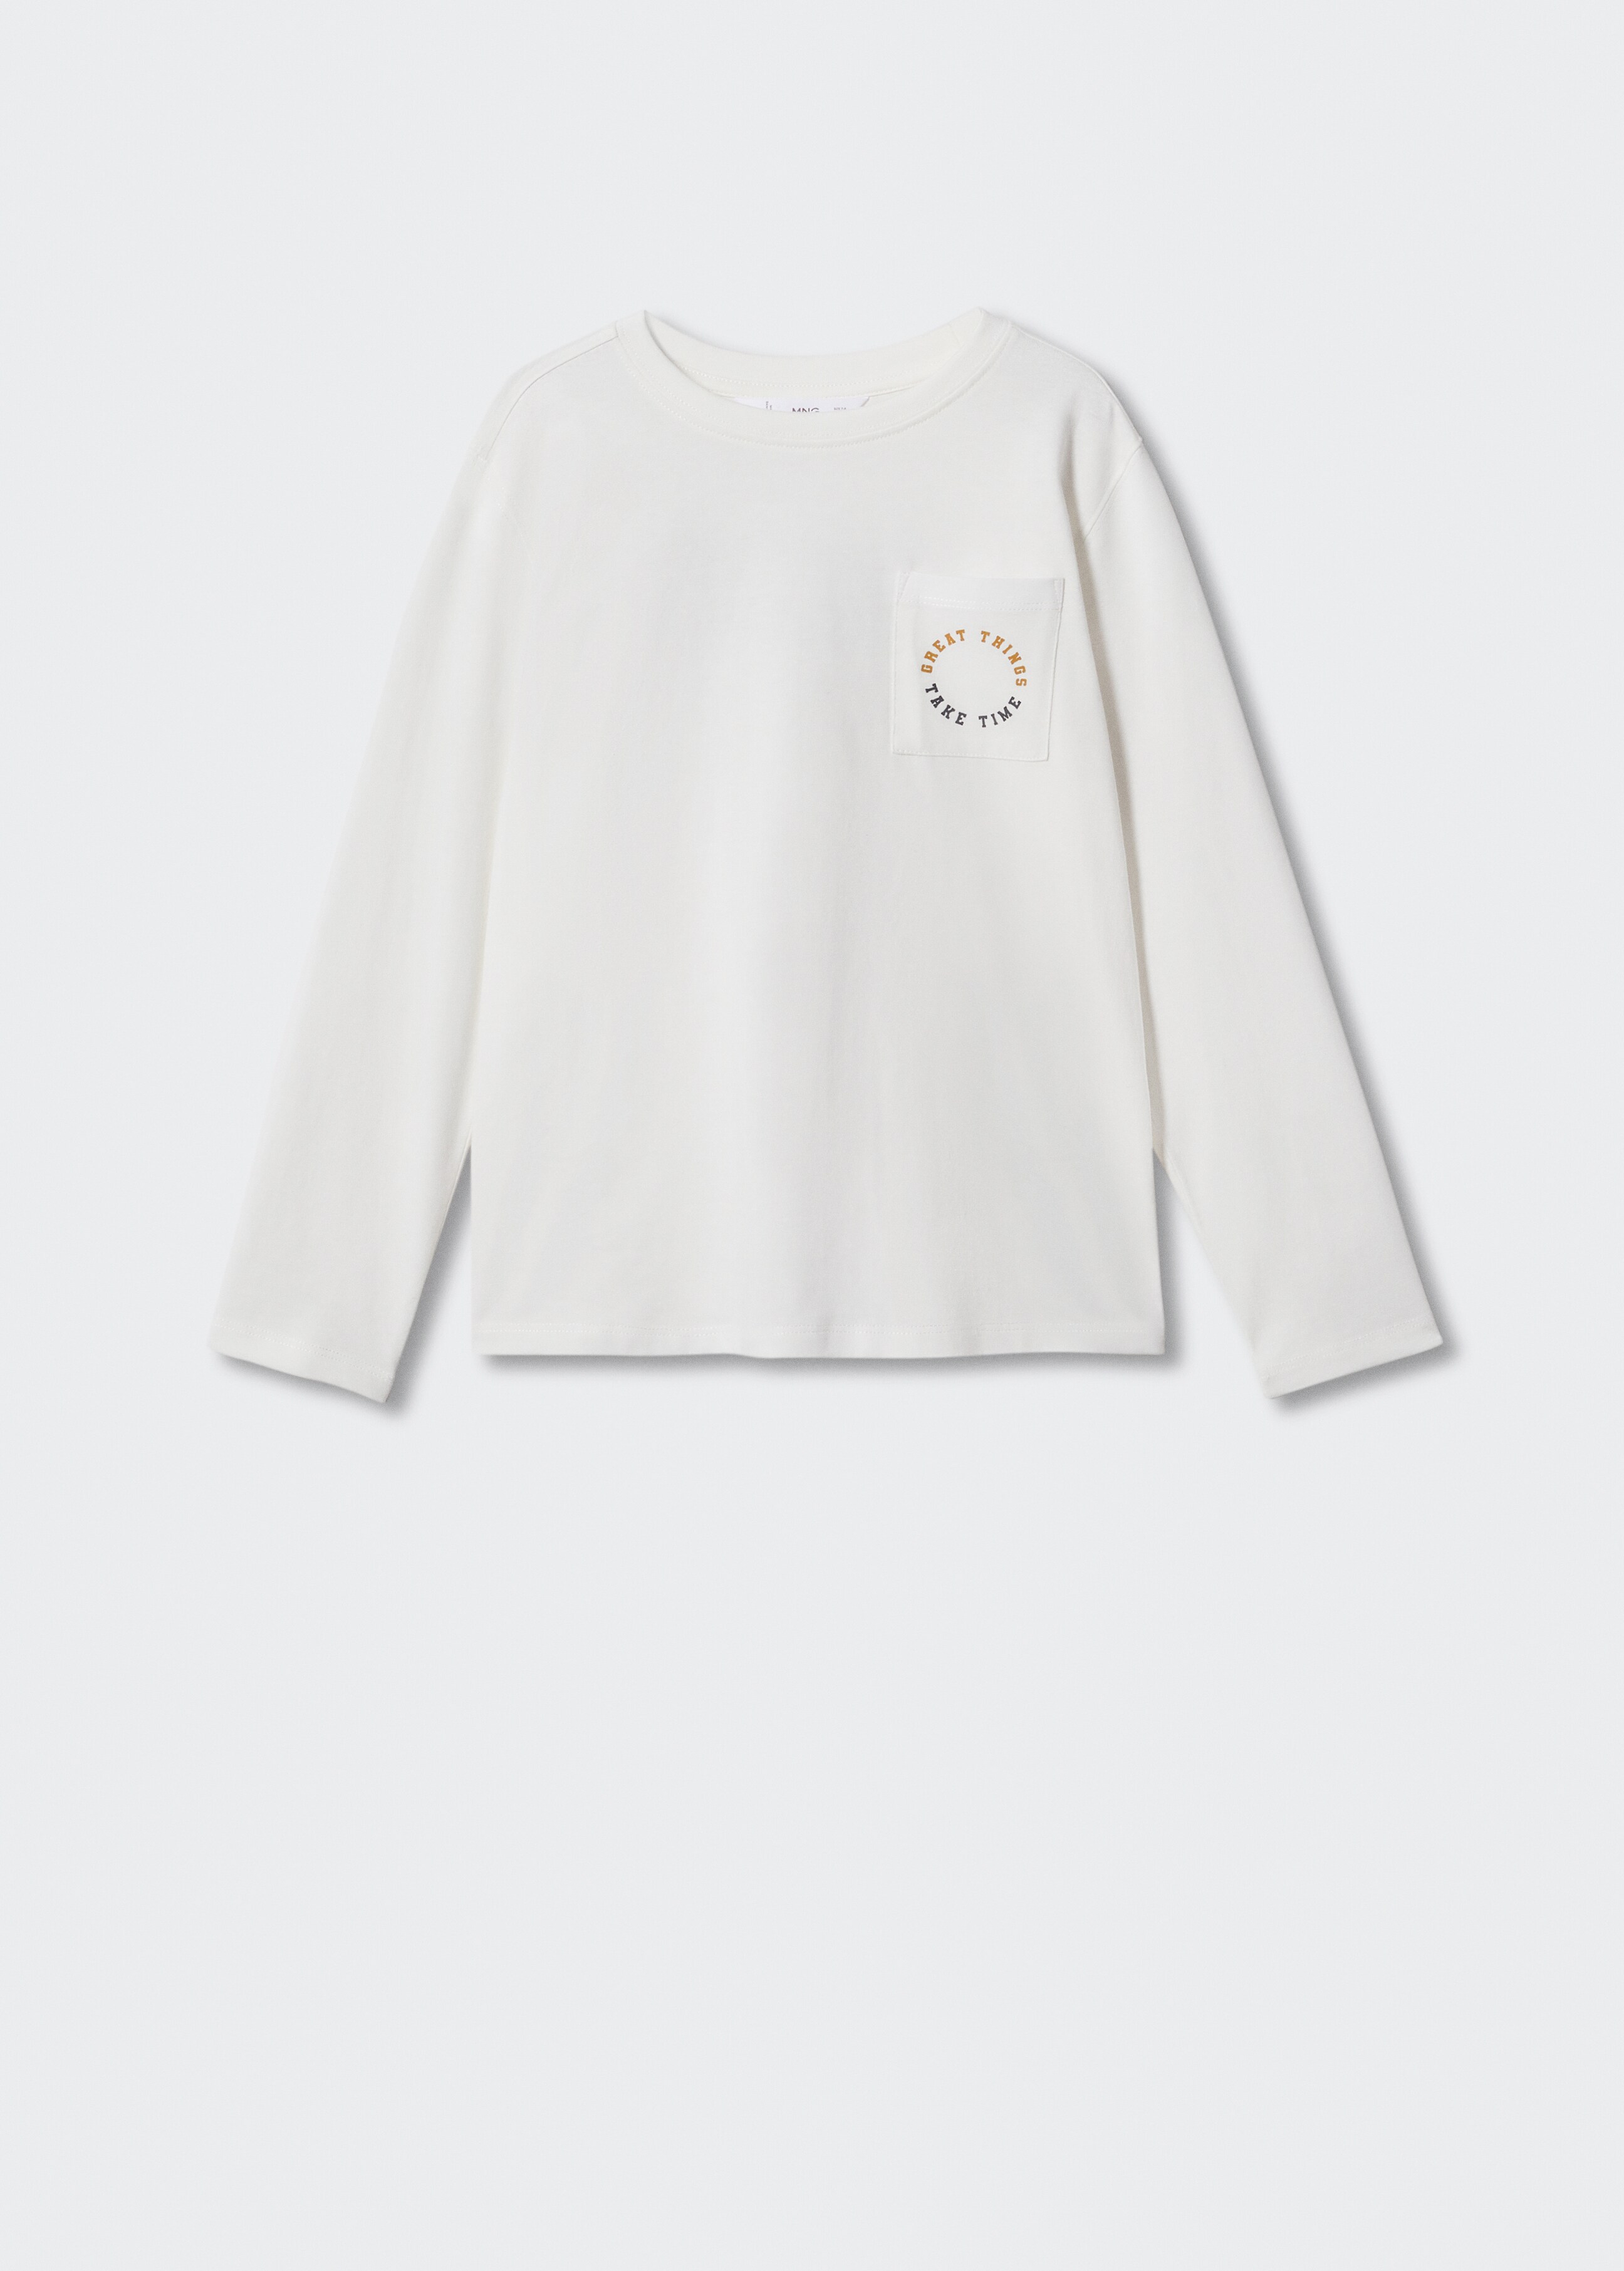 Camiseta algodón manga larga - Artículo sin modelo